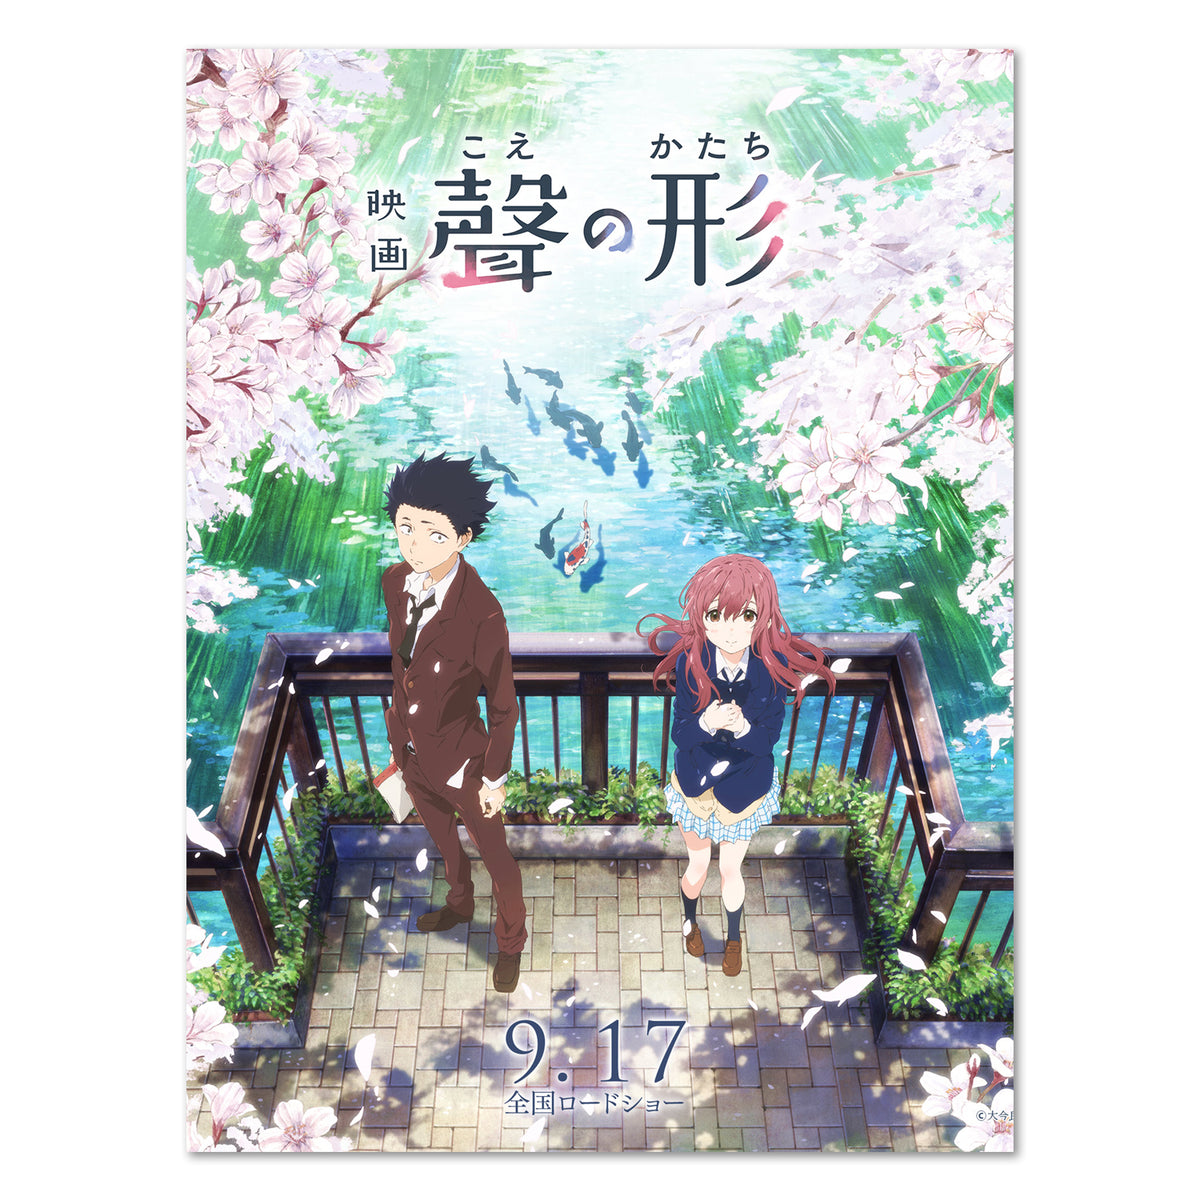 Koe no Katachi (A Silent Voice) Anime Poster | Pira Boxes – Pira Pira Boxes